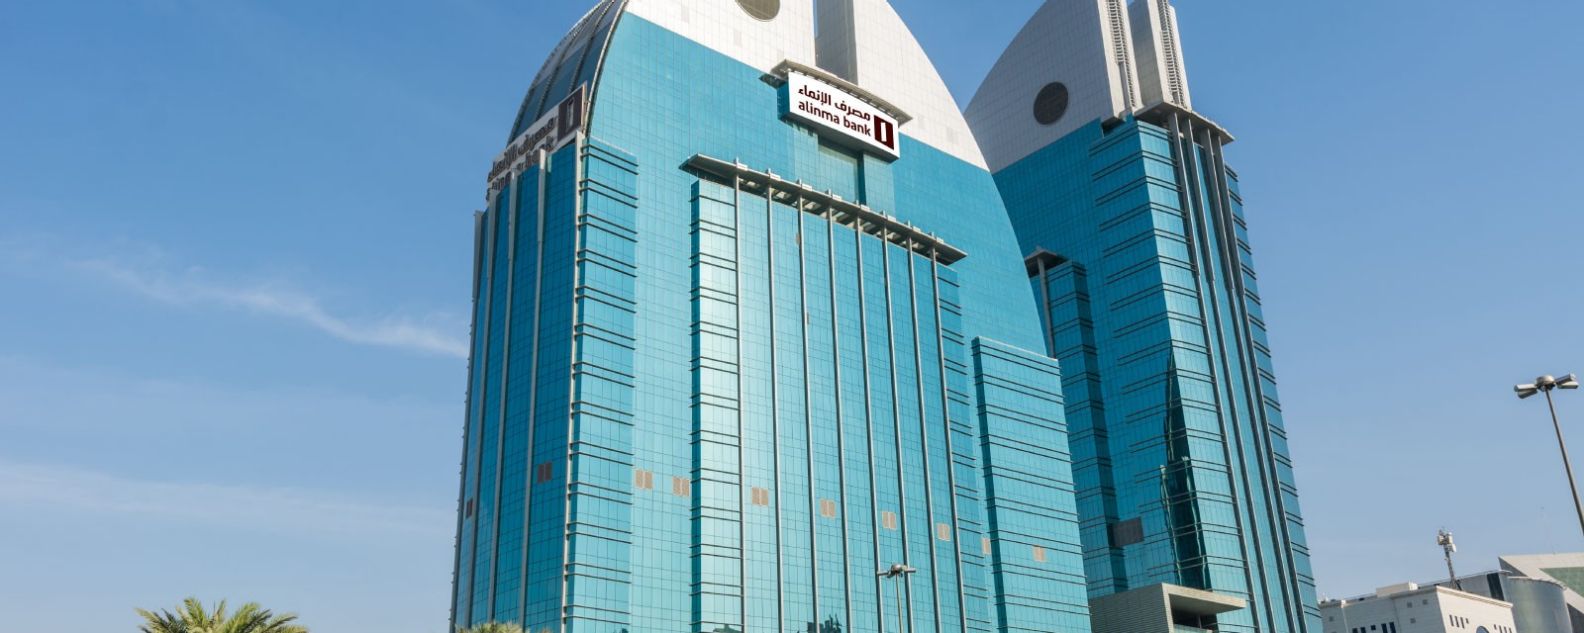 Alinma Bank headquarters in Riyadh, Saudi Arabia